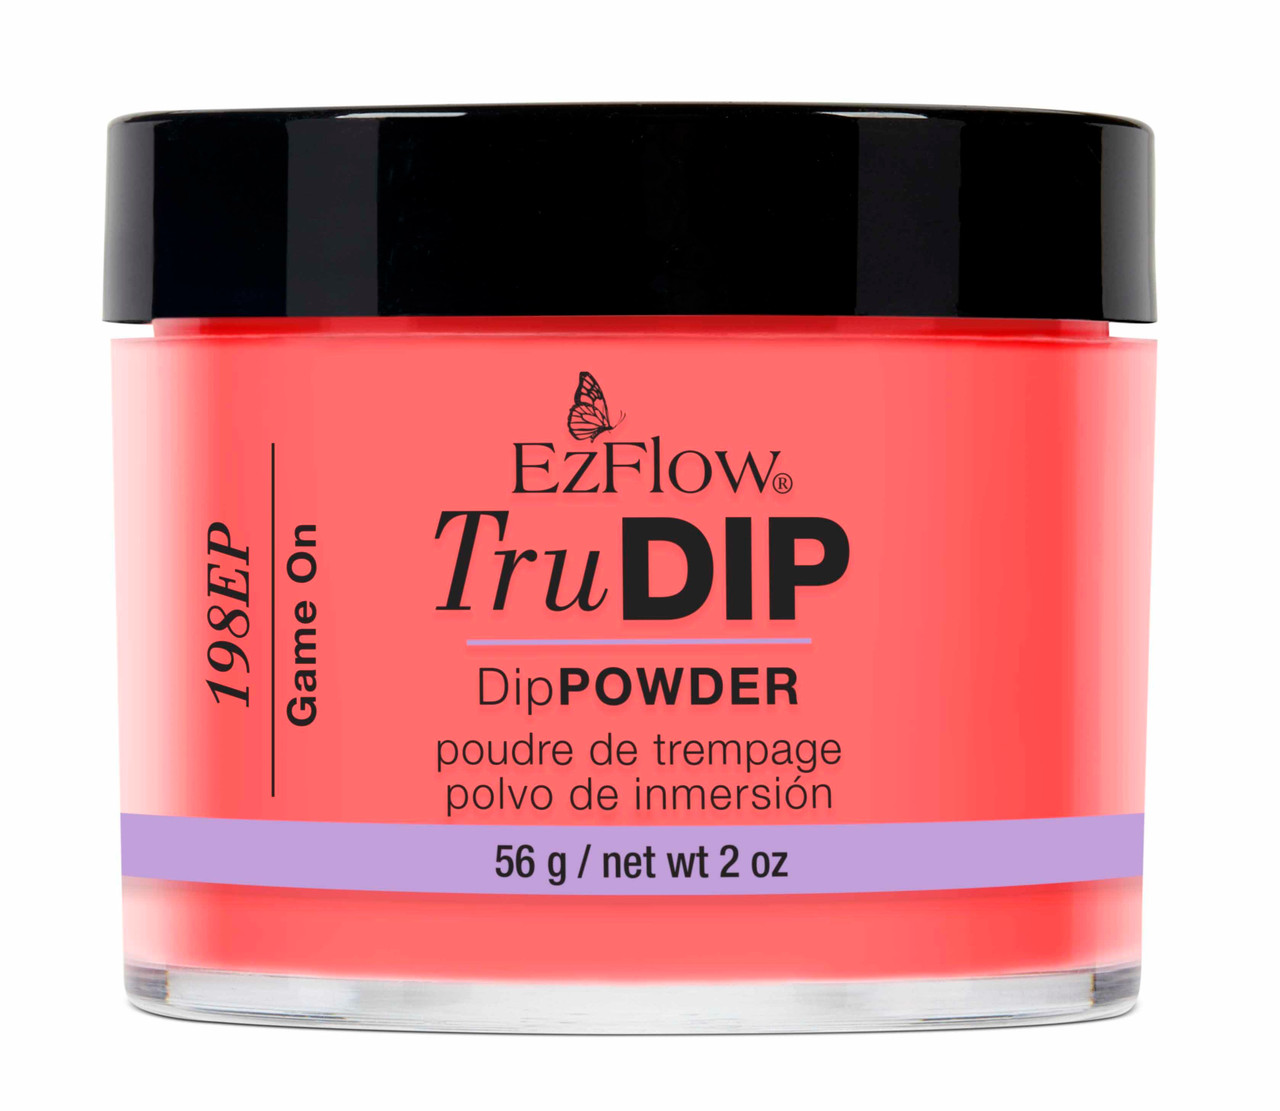 EZ TruDIP Dipping Powder Game On  - 2 oz